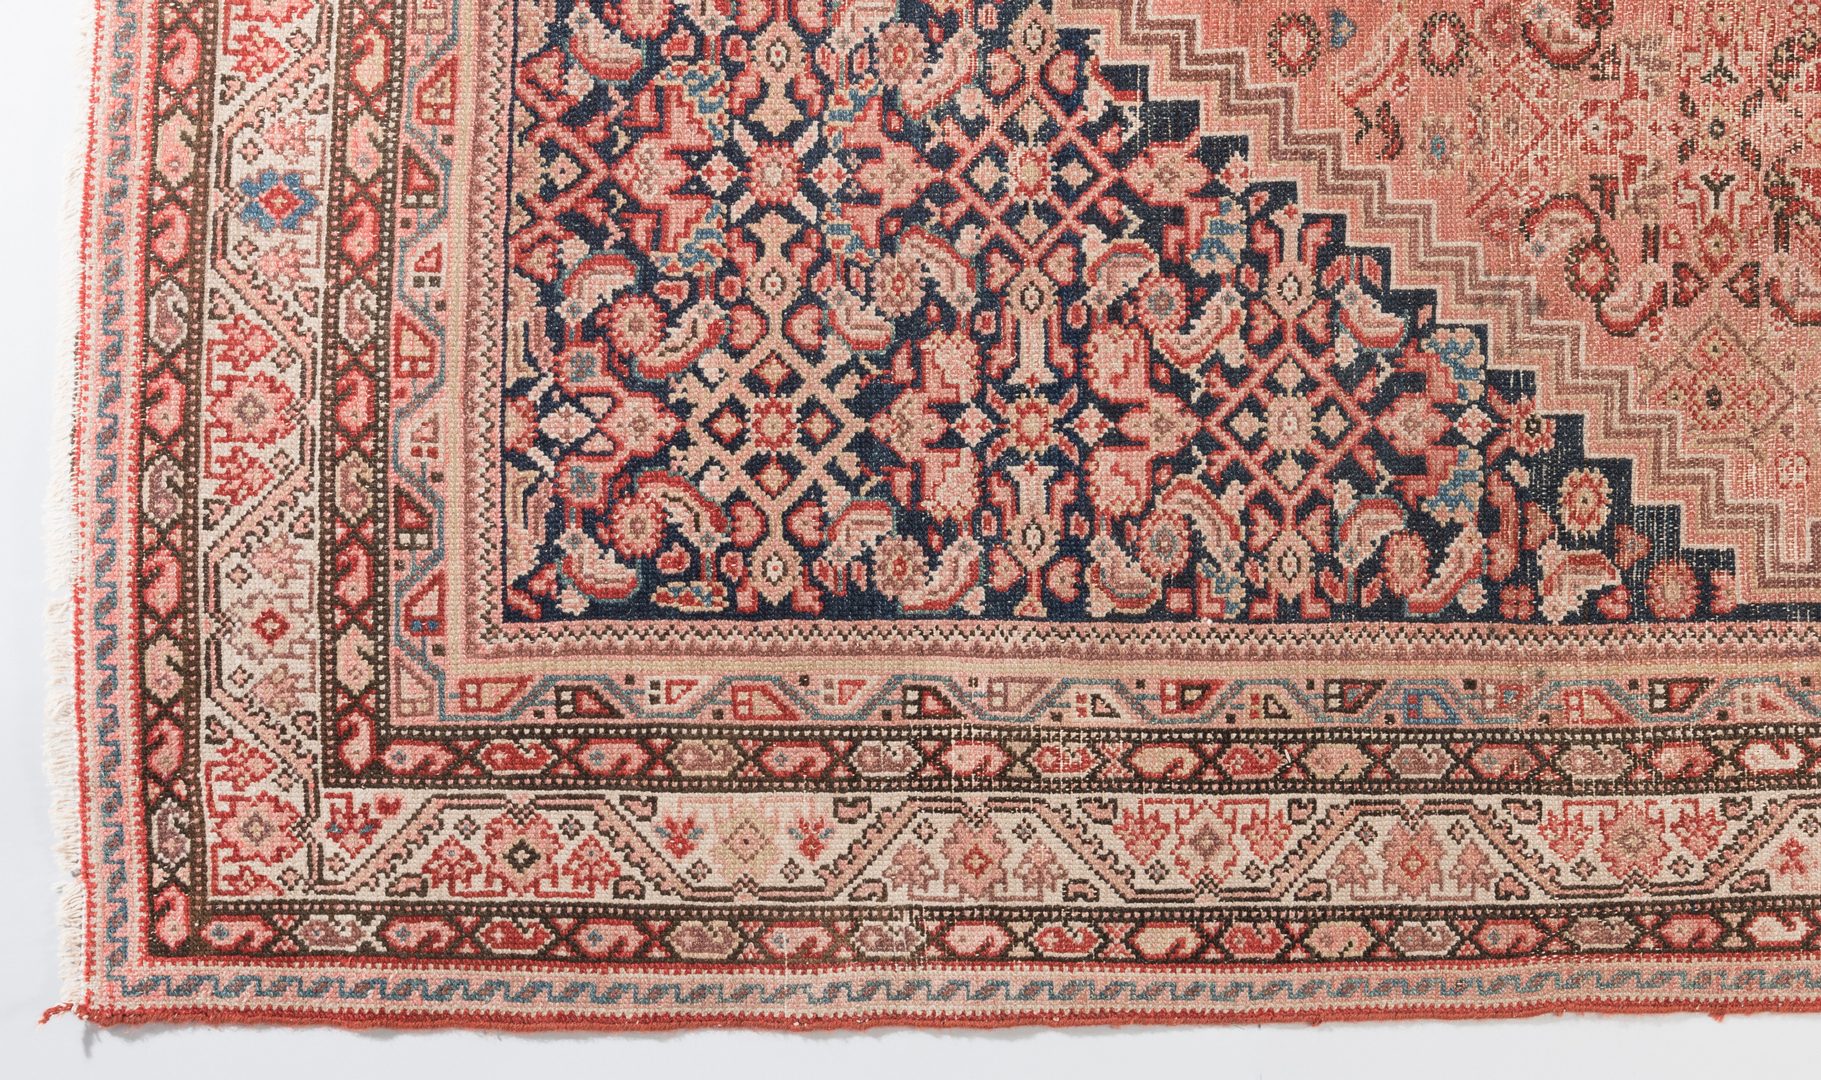 Lot 302: Antique Persian Hall Rug